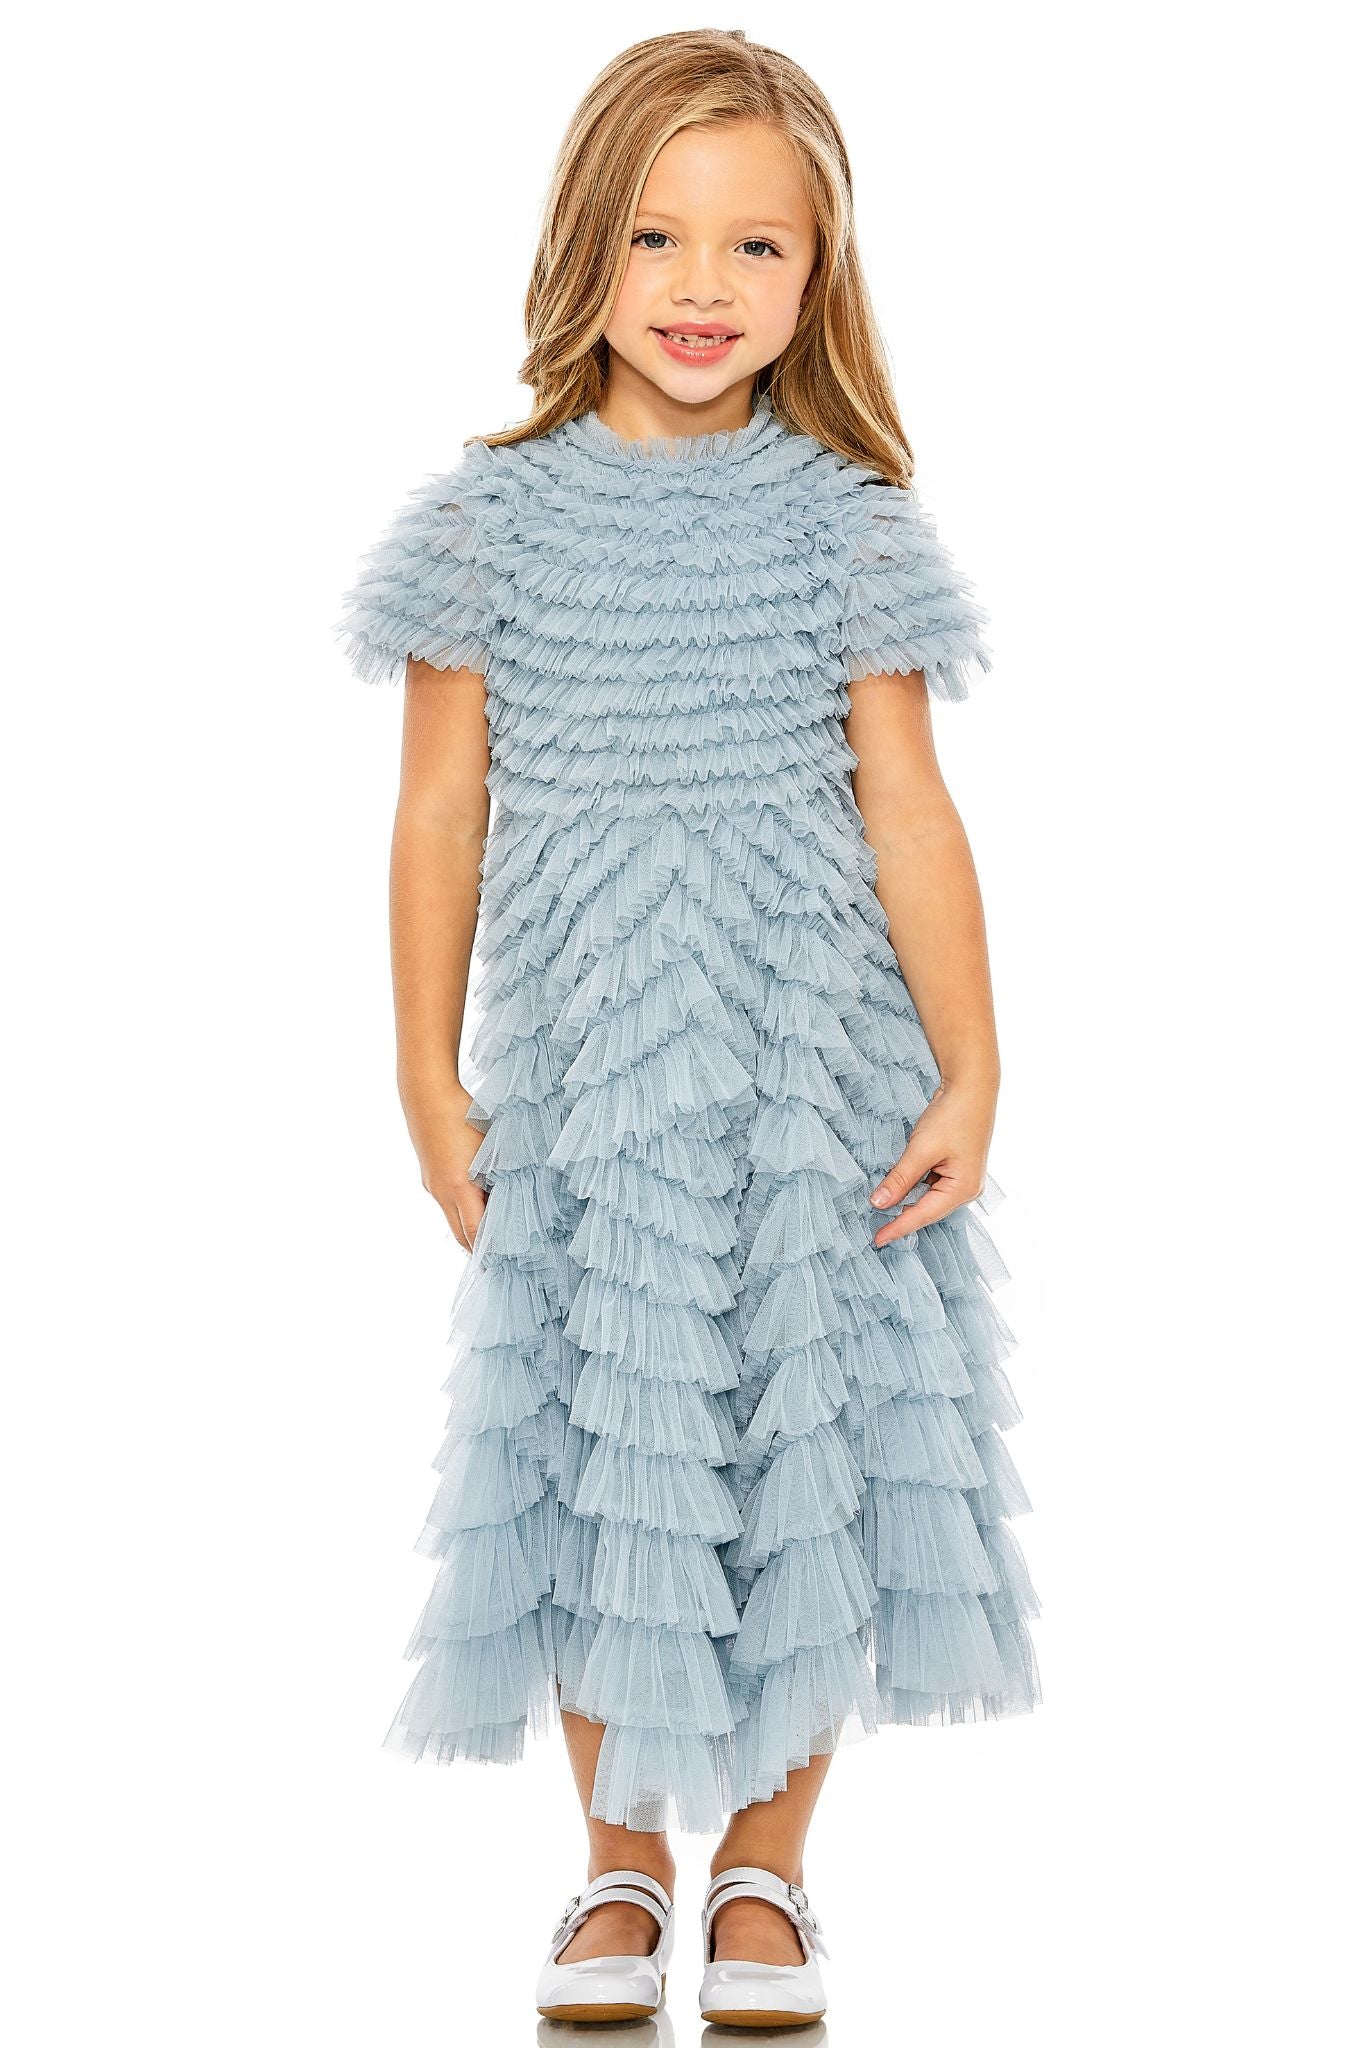 Winnie Ruffle Kids Dress in Blue by Mac Duggal - RENTAL